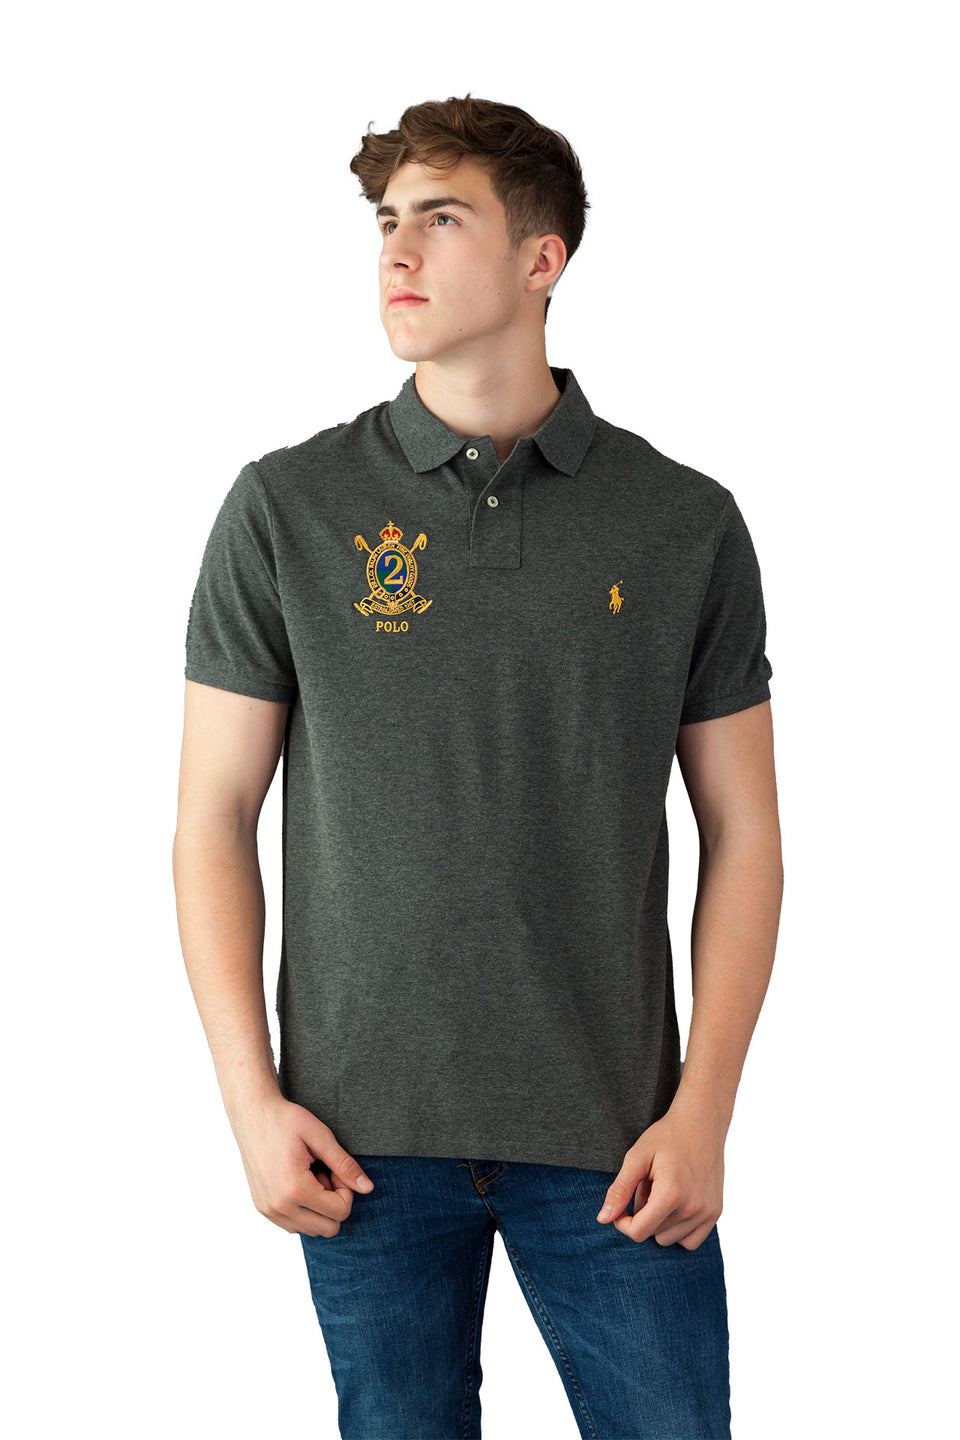 Ralph Lauren Grey Polo Shirt - Camden Connaught